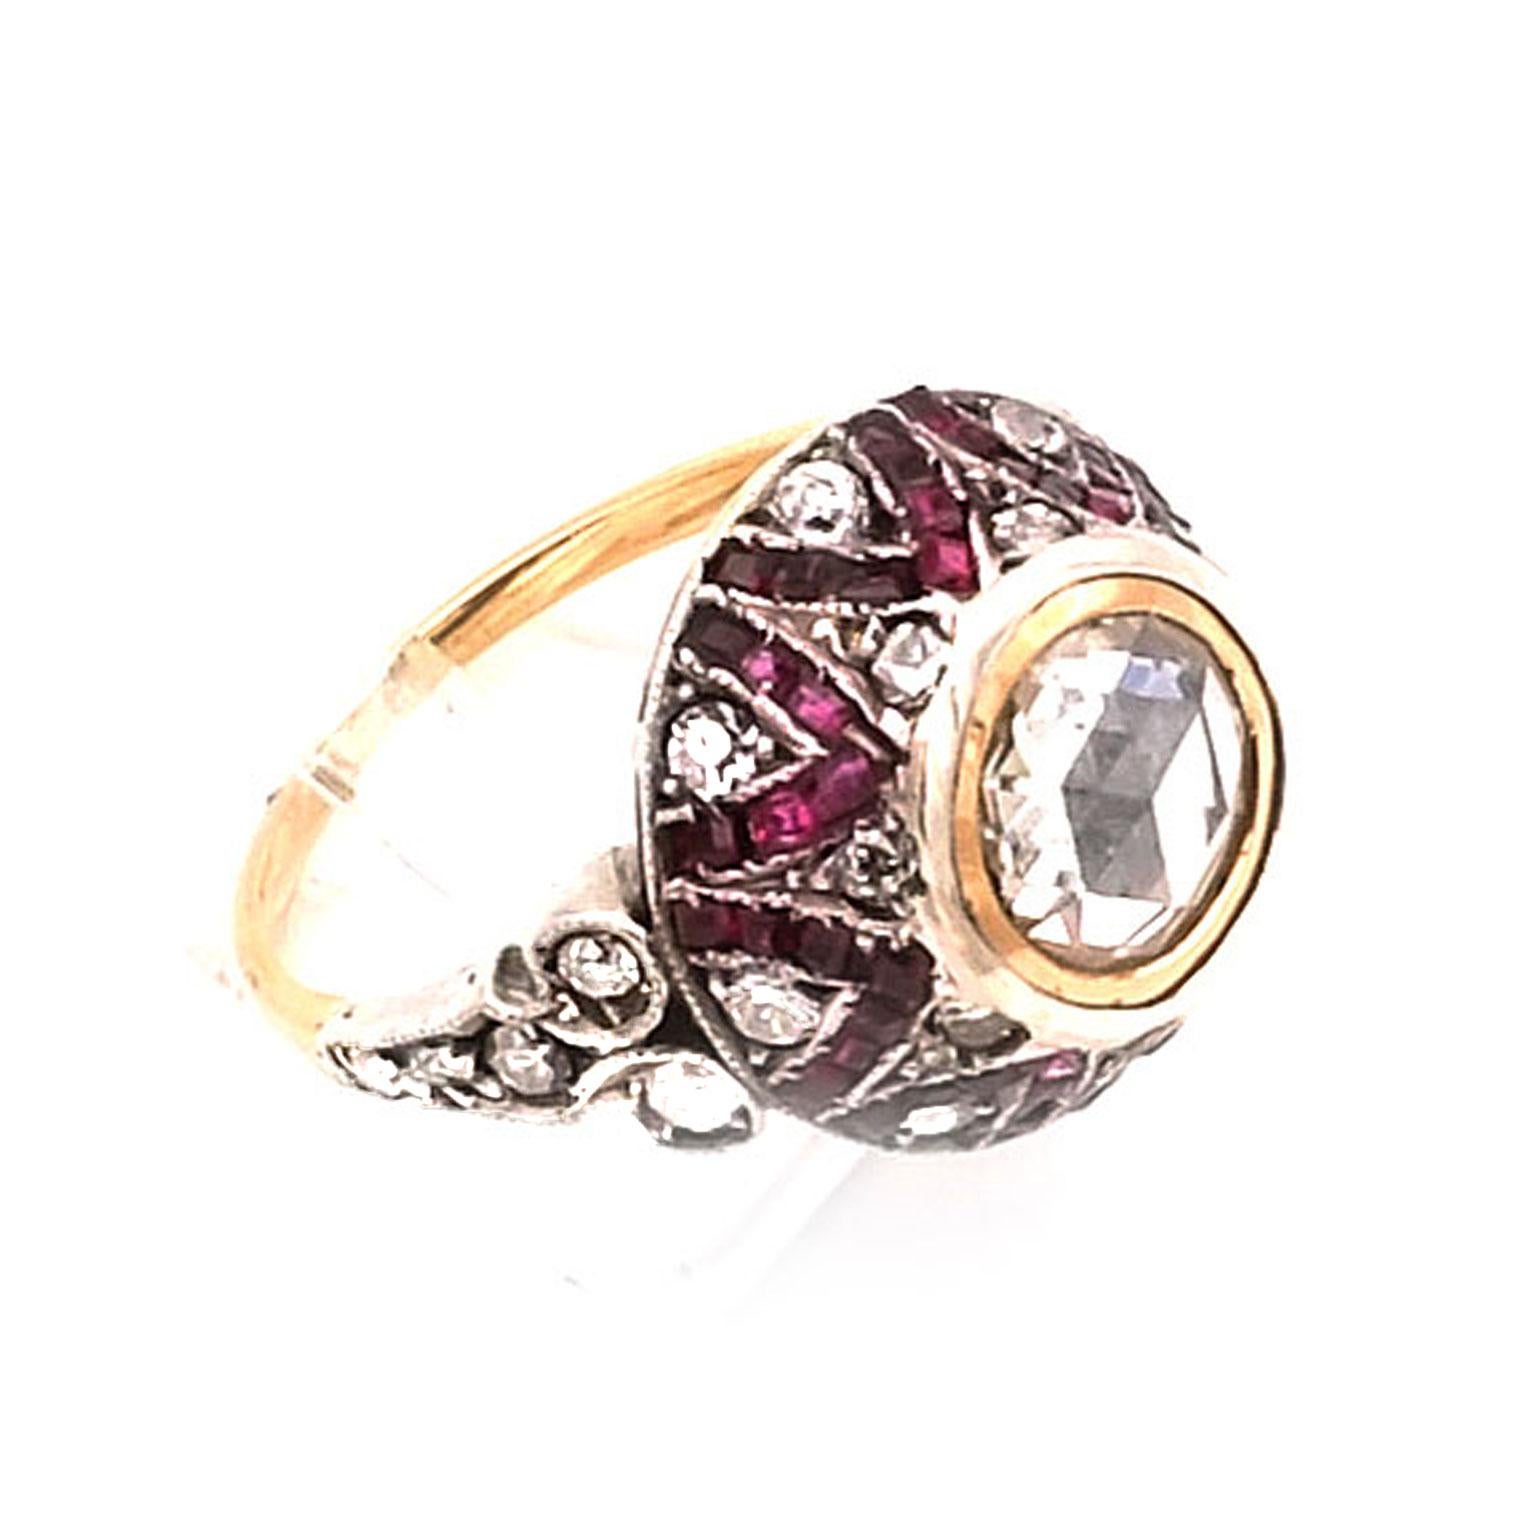 Women's Art Deco 0.8 Carat Rosecut Diamond and Ruby Solitaire Ring, circa 1920